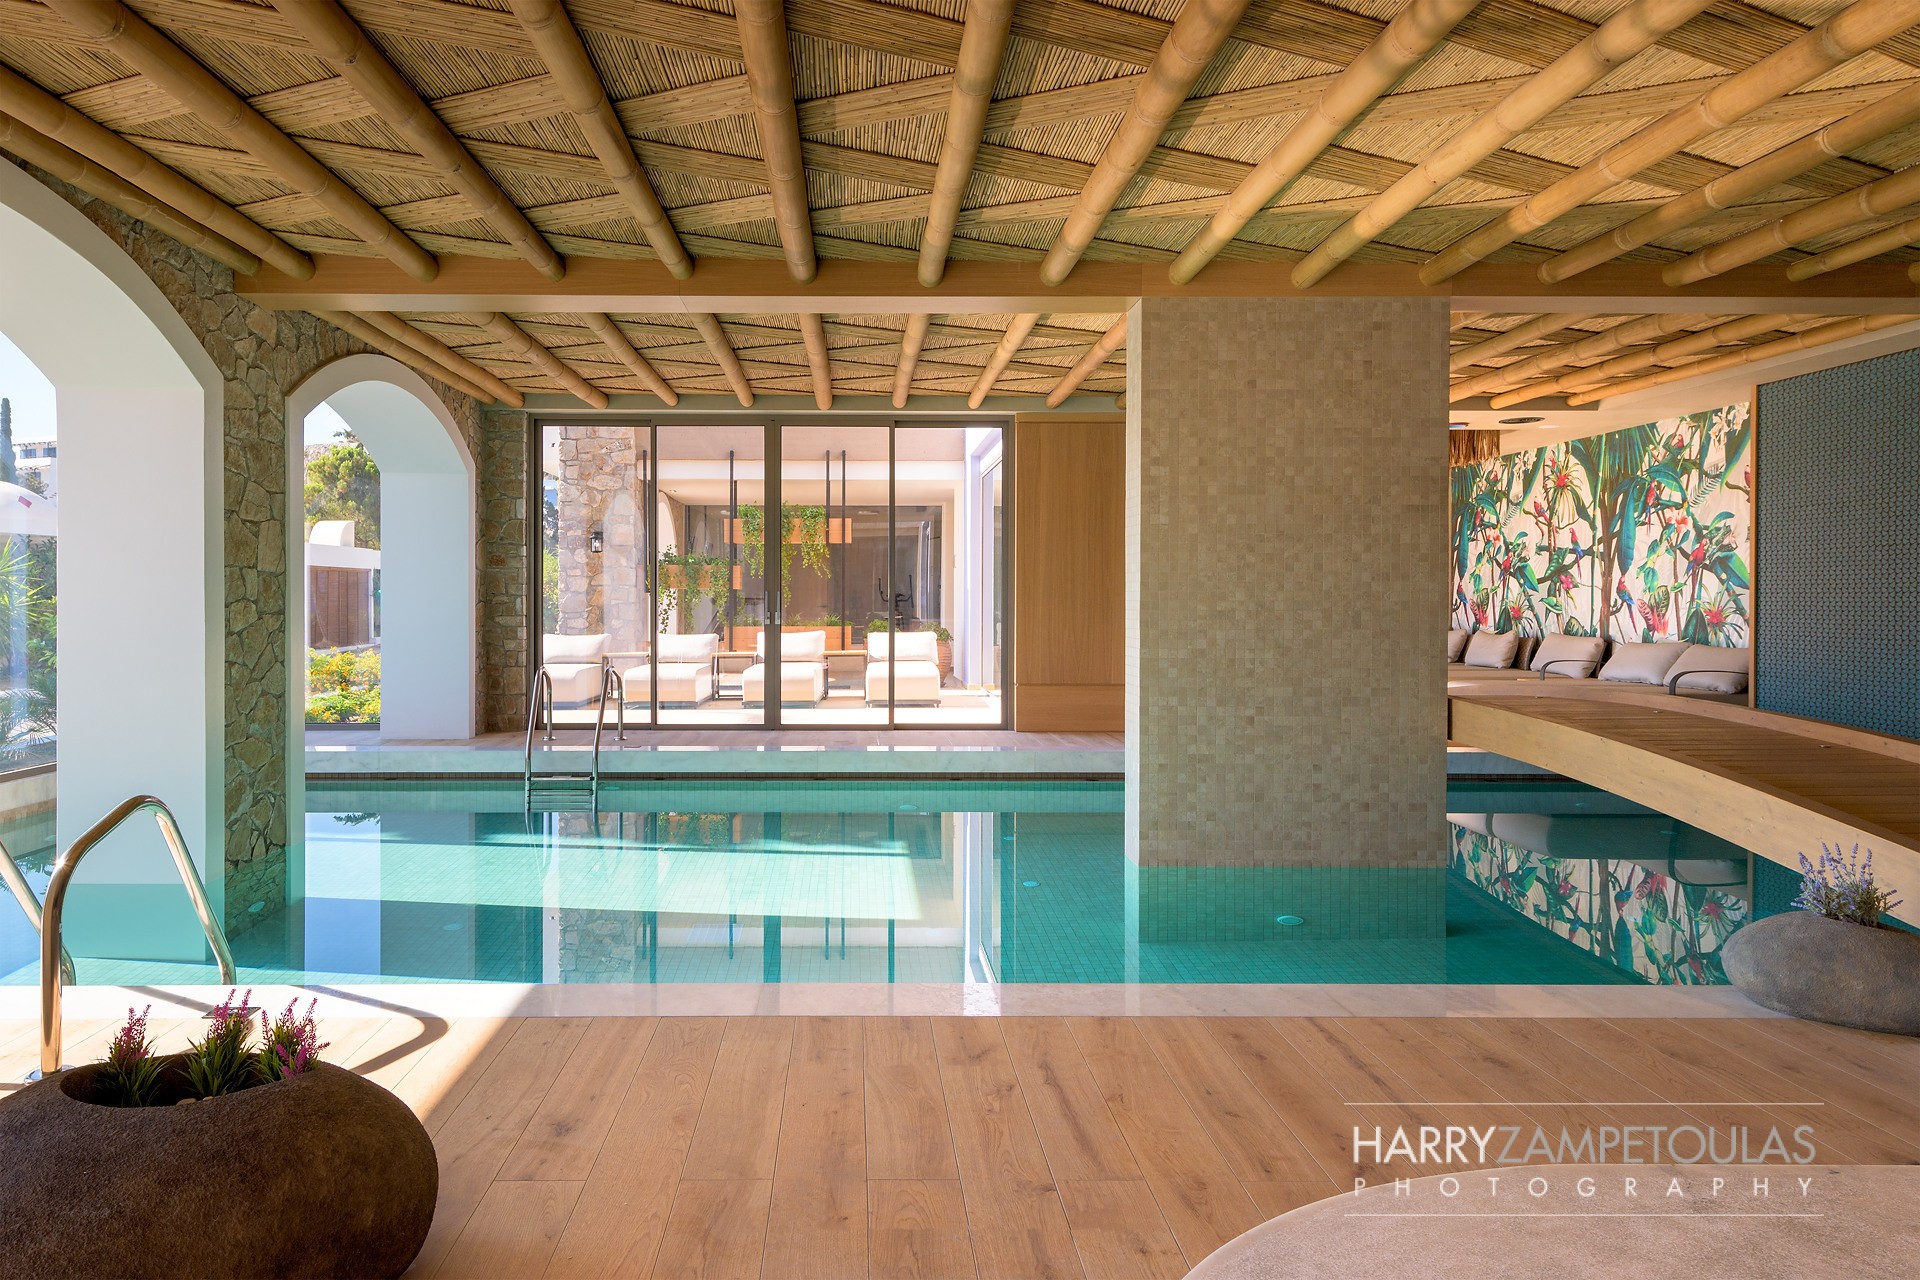 SPA-Pool-Day-3 Porto Angeli Resort Hotel - Hotel Photography Harry Zampetoulas 